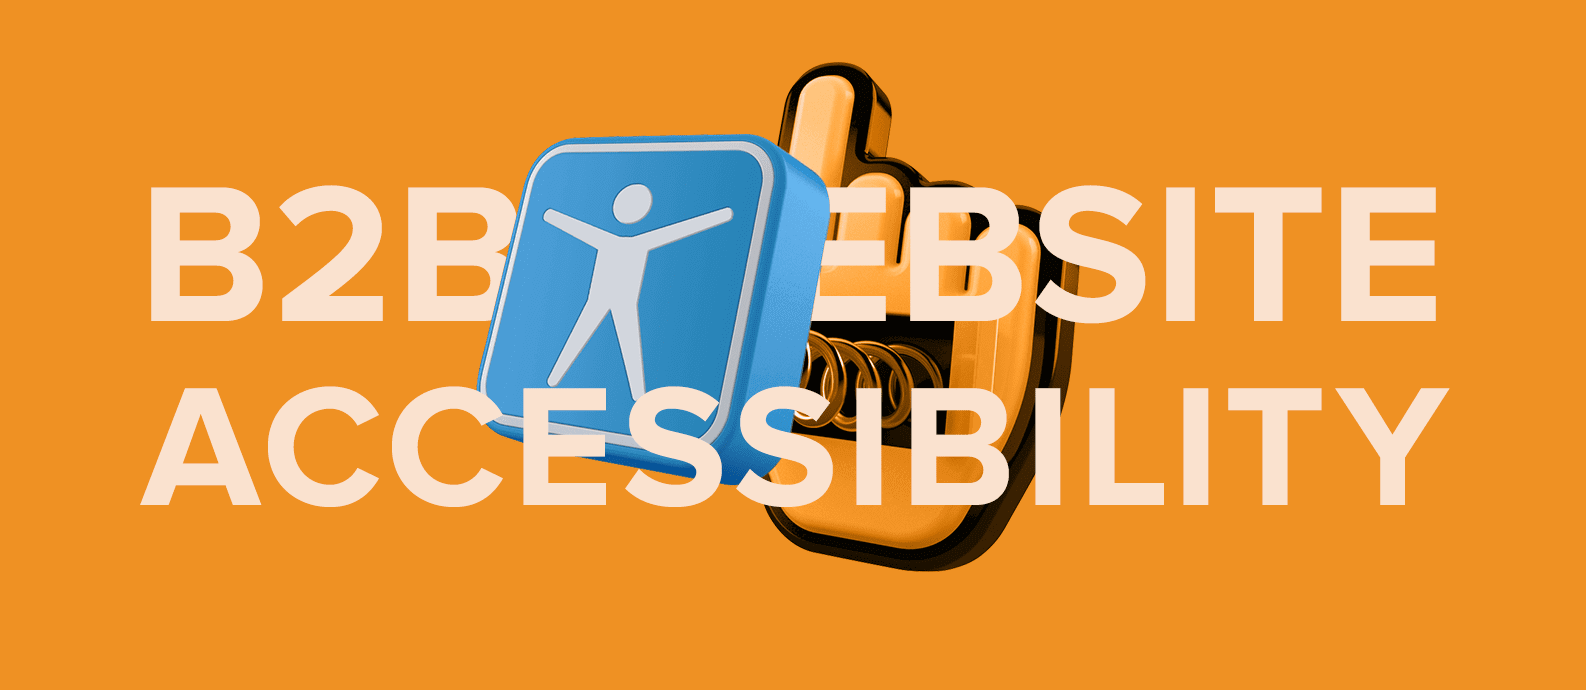 b2b website accessibility, website design